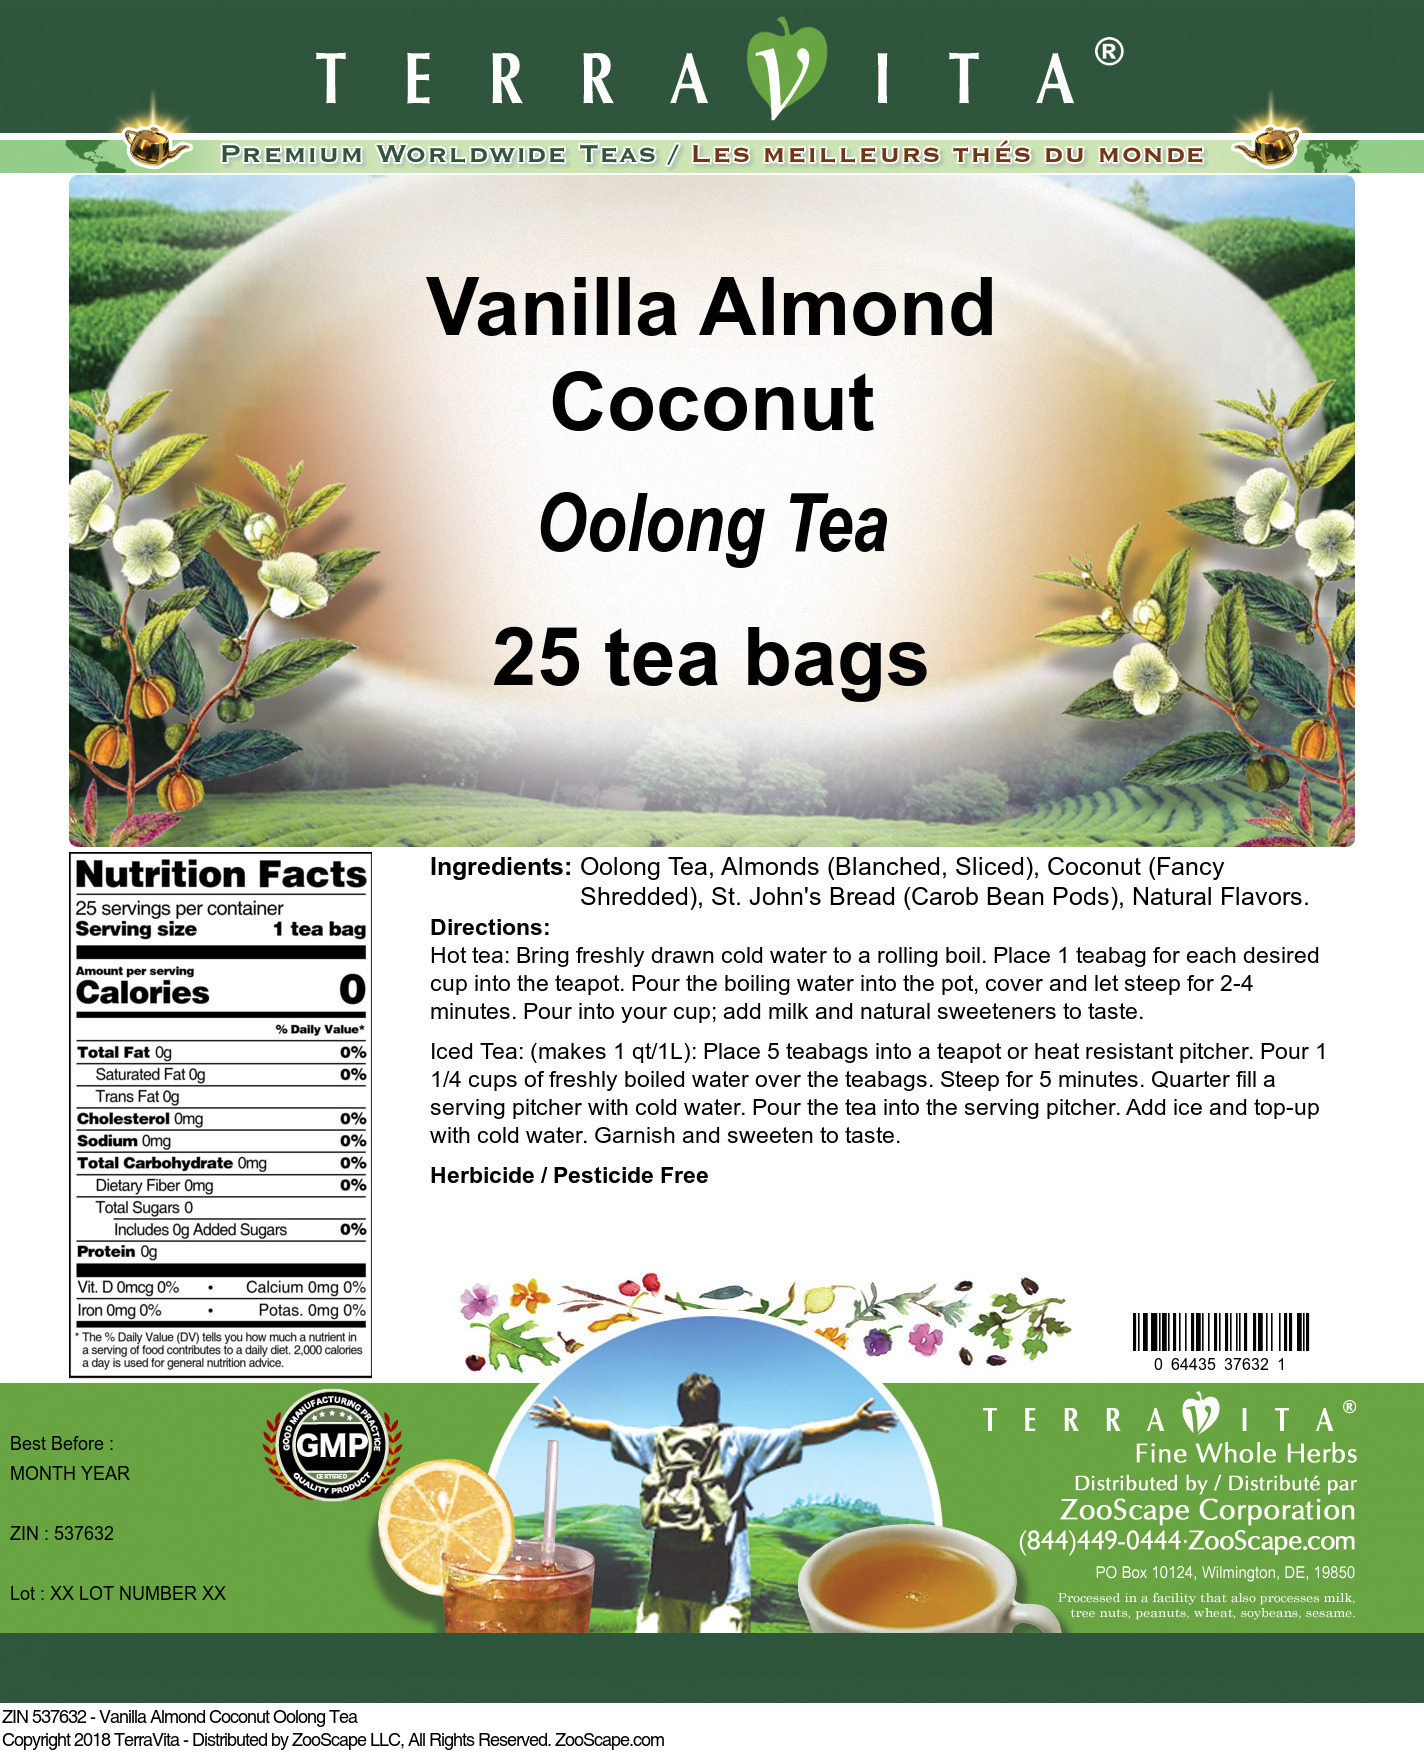 Vanilla Almond Coconut Oolong Tea - Label